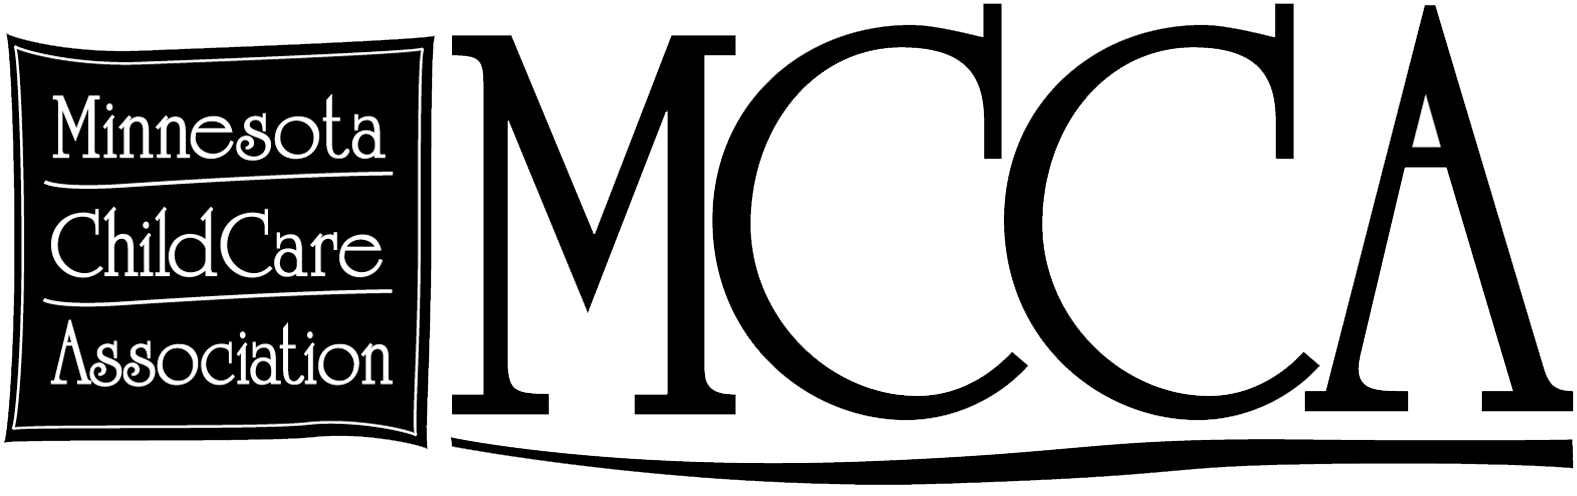 MCCA Logo